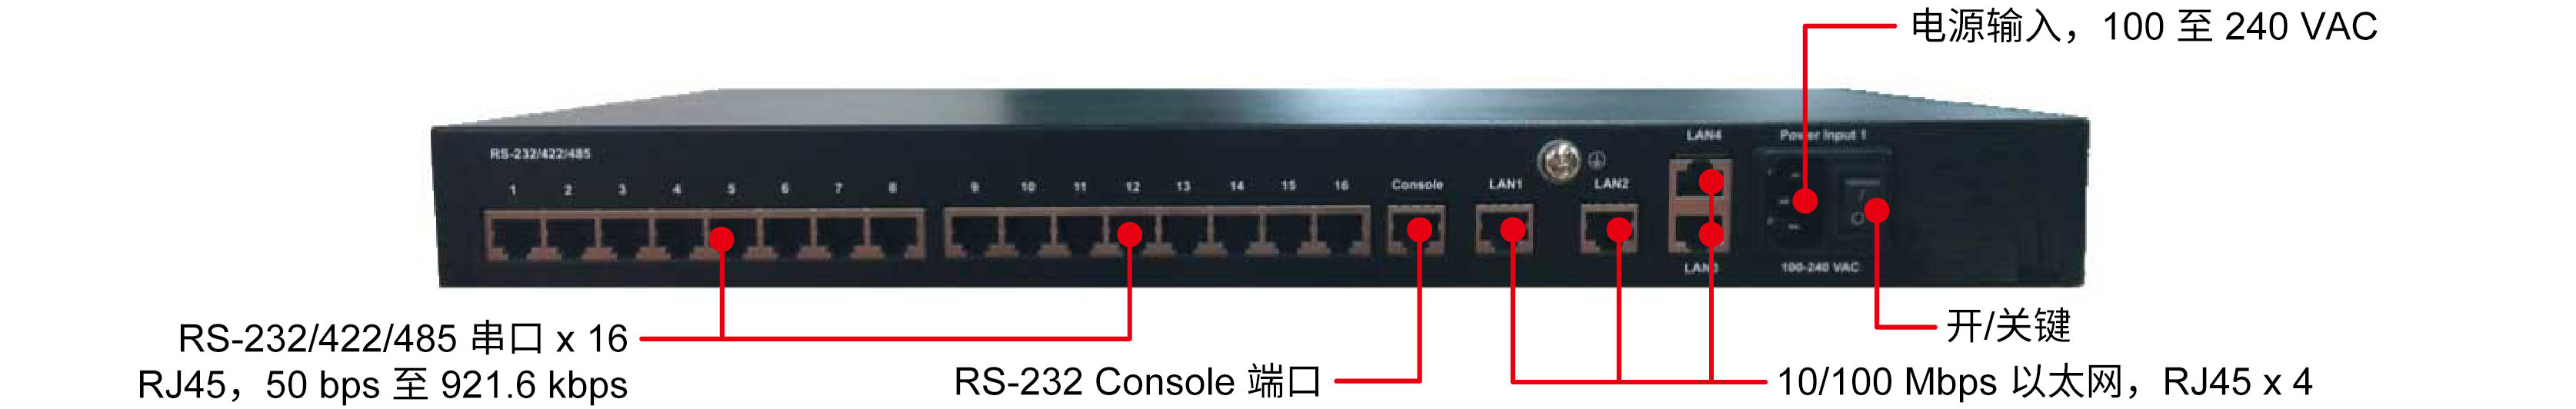 DA-660A 系列 ARM 架构 1U 机架式工业计算机，带 8 至 16 个串口和 4 个 LAN 端口 